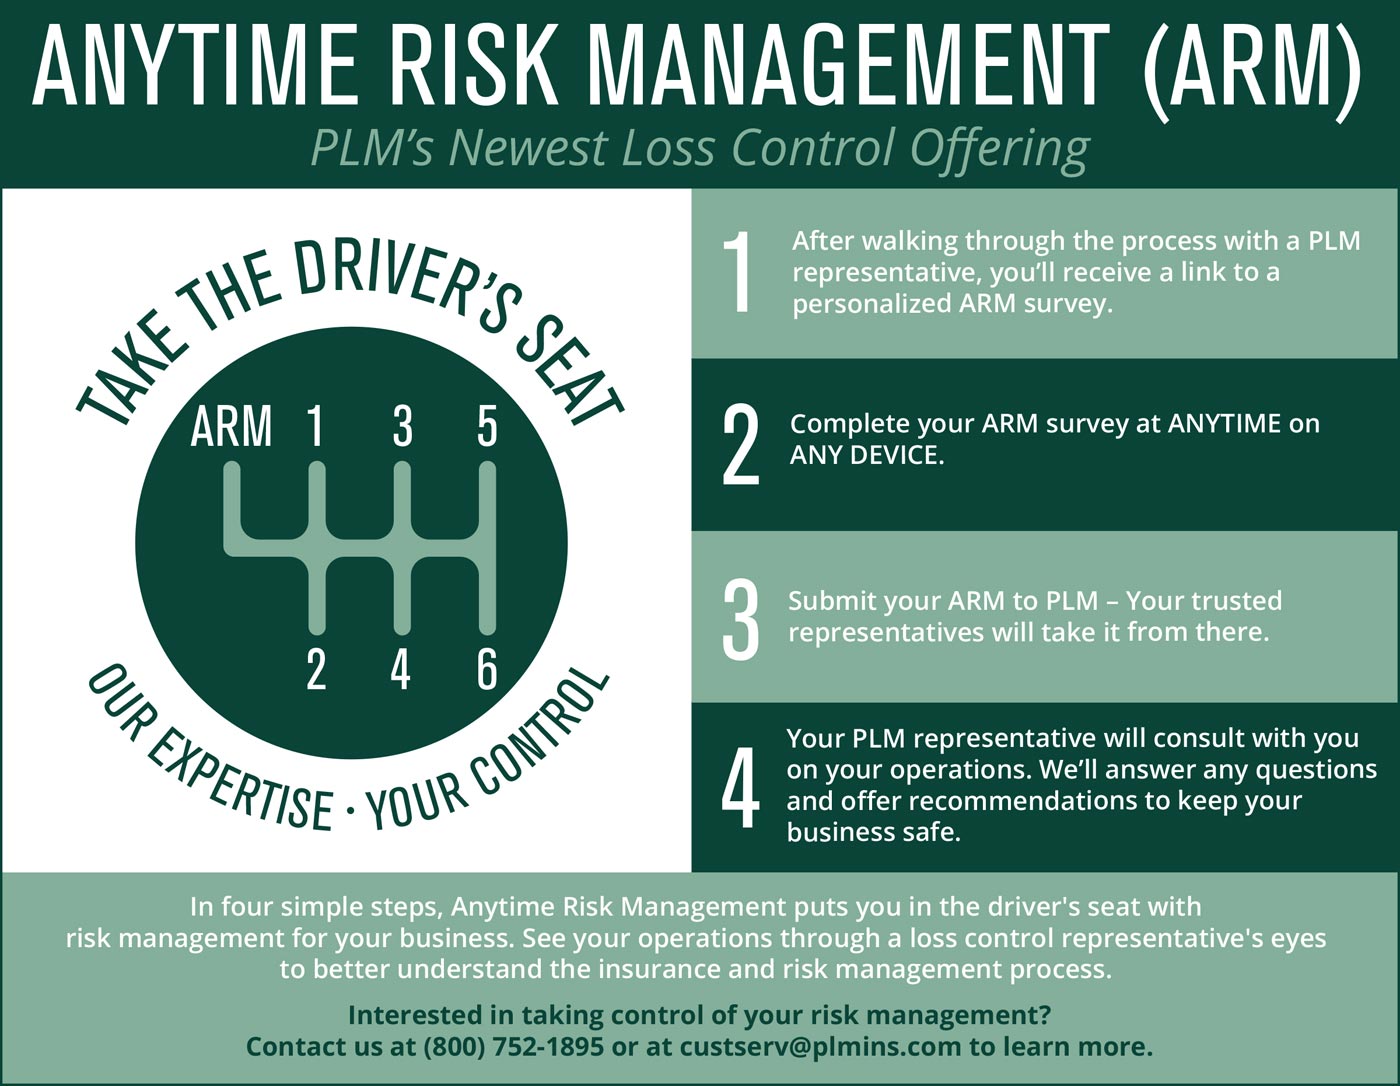 Anytime Risk Management ARM